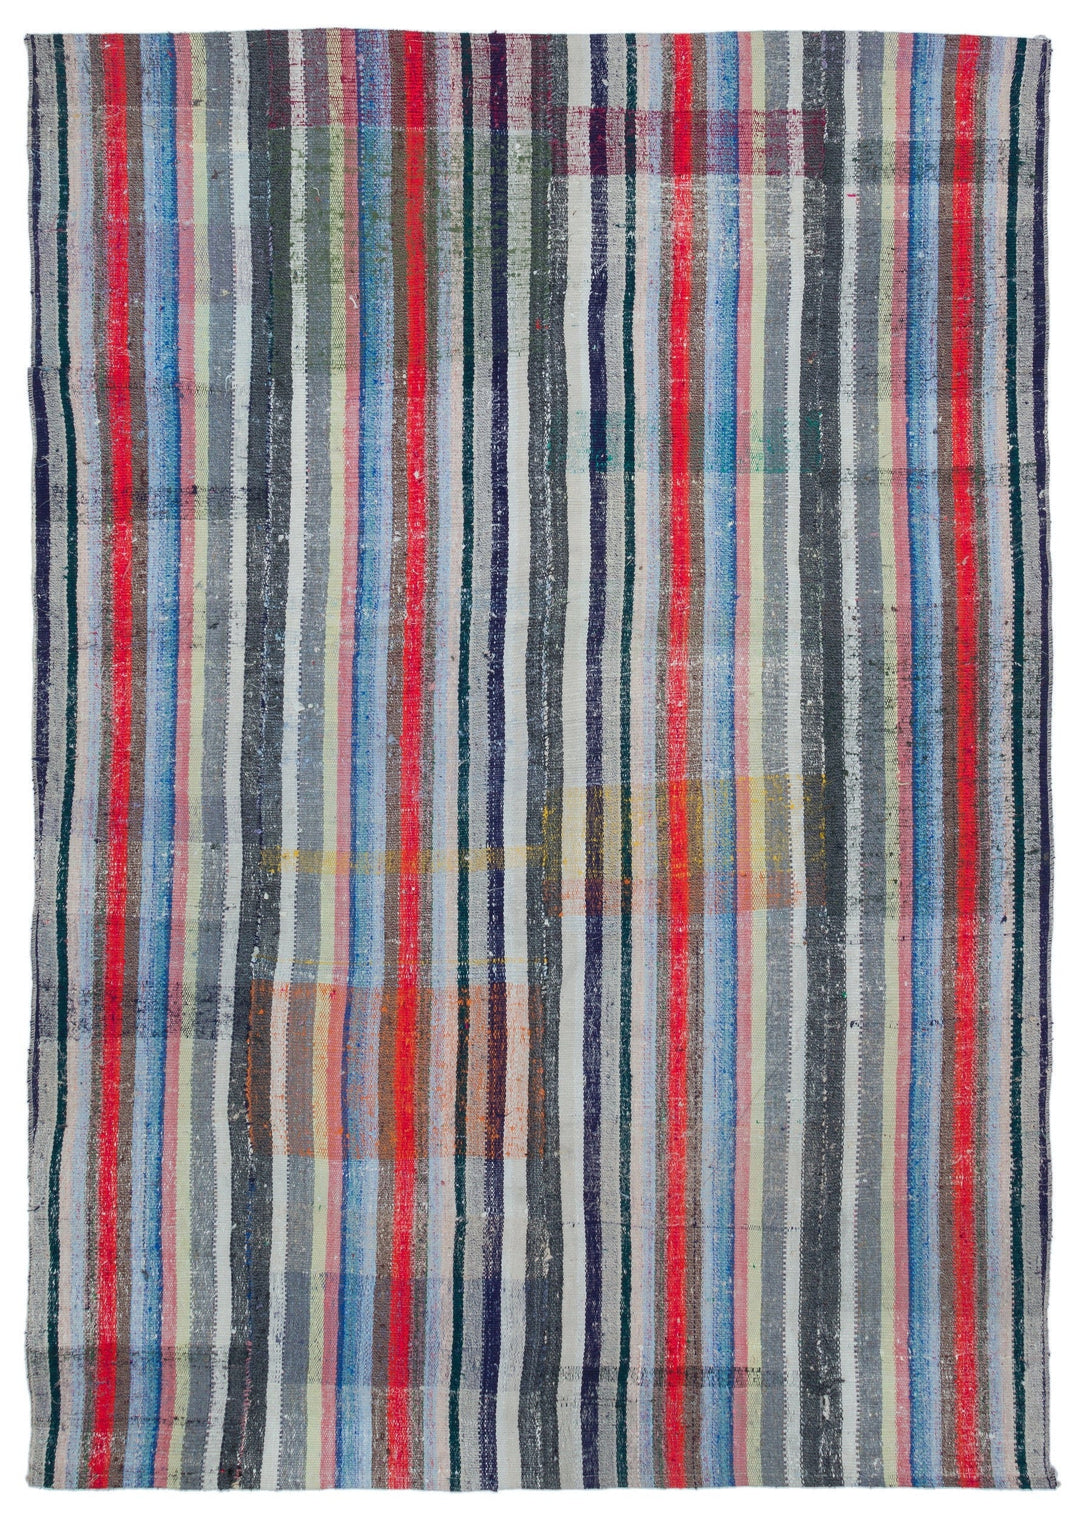 Cretan Beige Striped Wool Hand-Woven Carpet 165 x 234